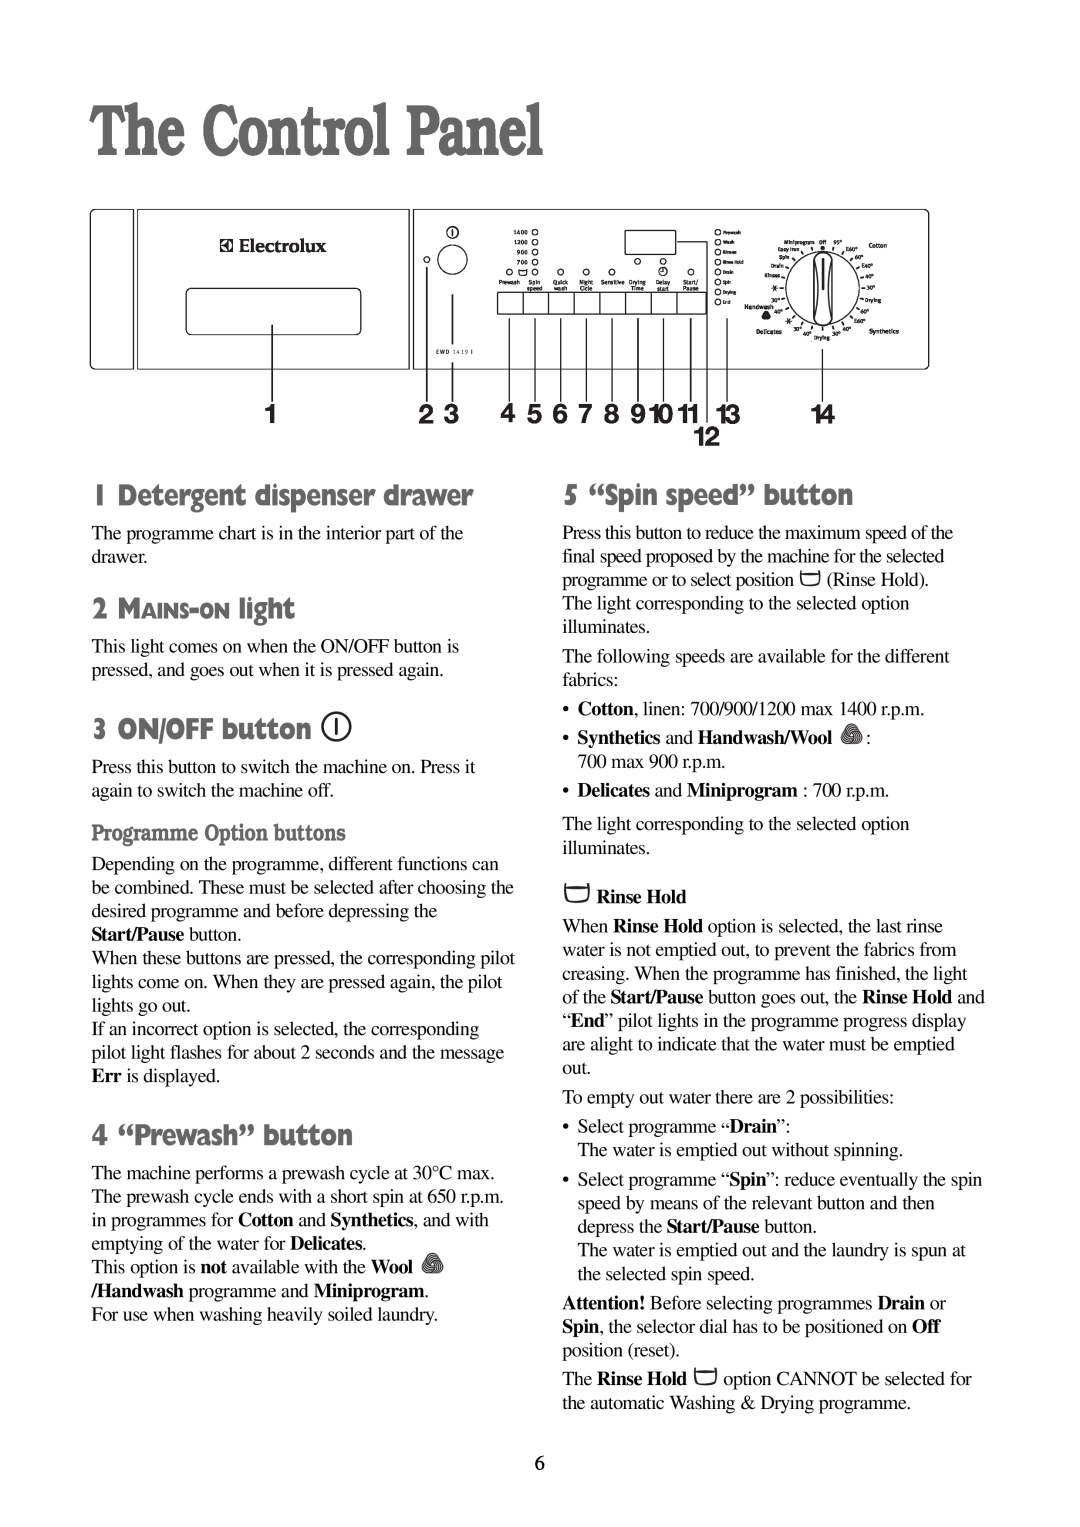 Electrolux EWD 1419 I The Control Panel, Detergent dispenser drawer, MAINS-ON light, 3 ON/OFF button, 4 “Prewash” button 